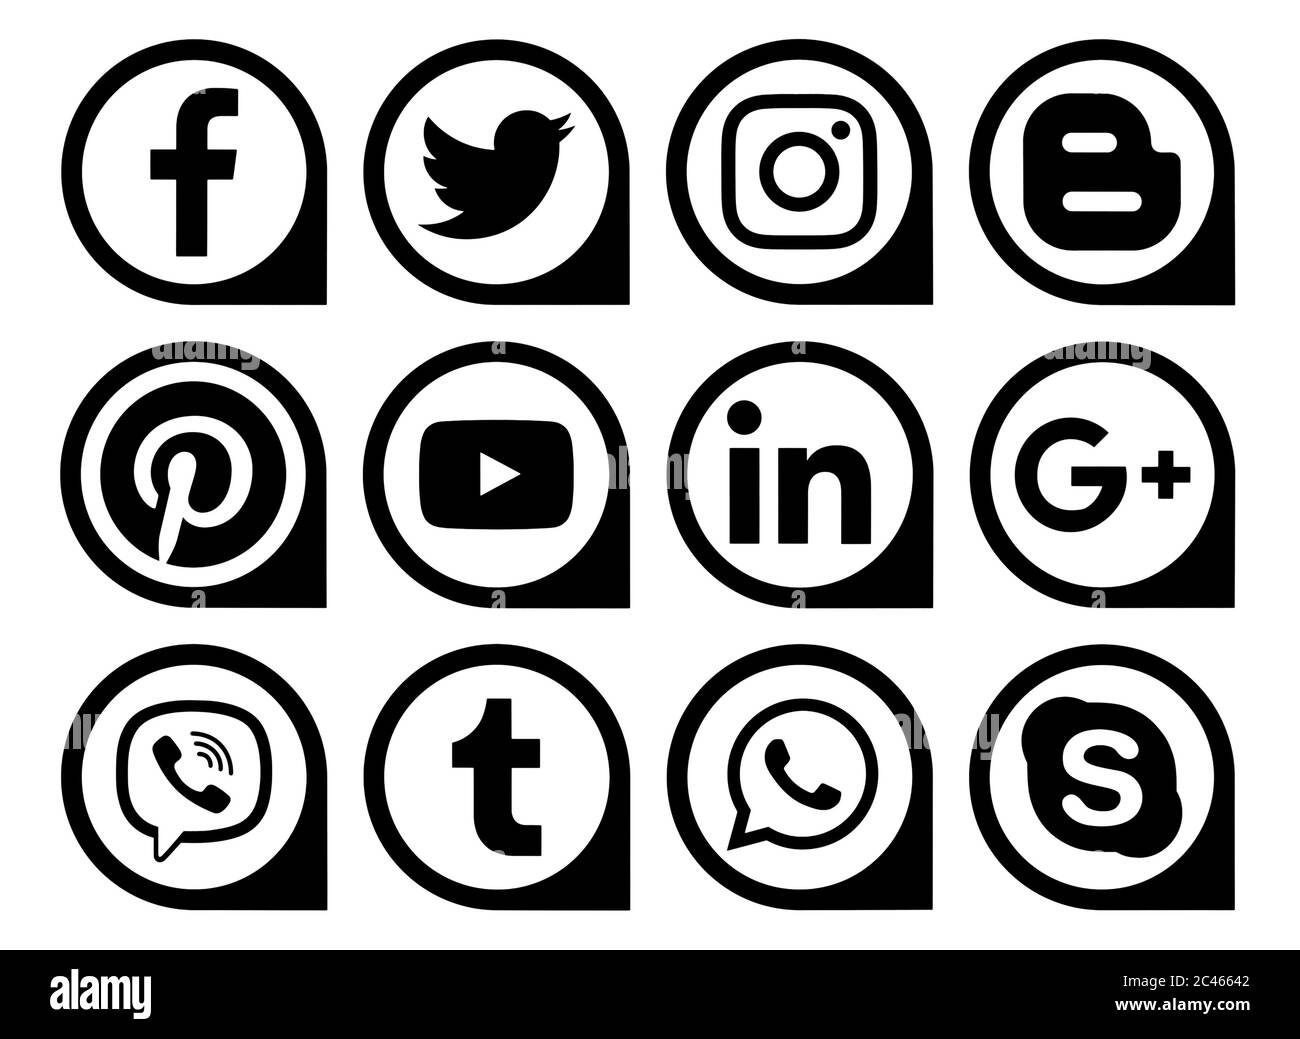 Kiev, Ucraina - 11 marzo 2019: I popolari social media icone nere puntatori stampati su carta: Facebook, Twitter, Instagram, Pinterest, LinkedIn, Viber, Foto Stock